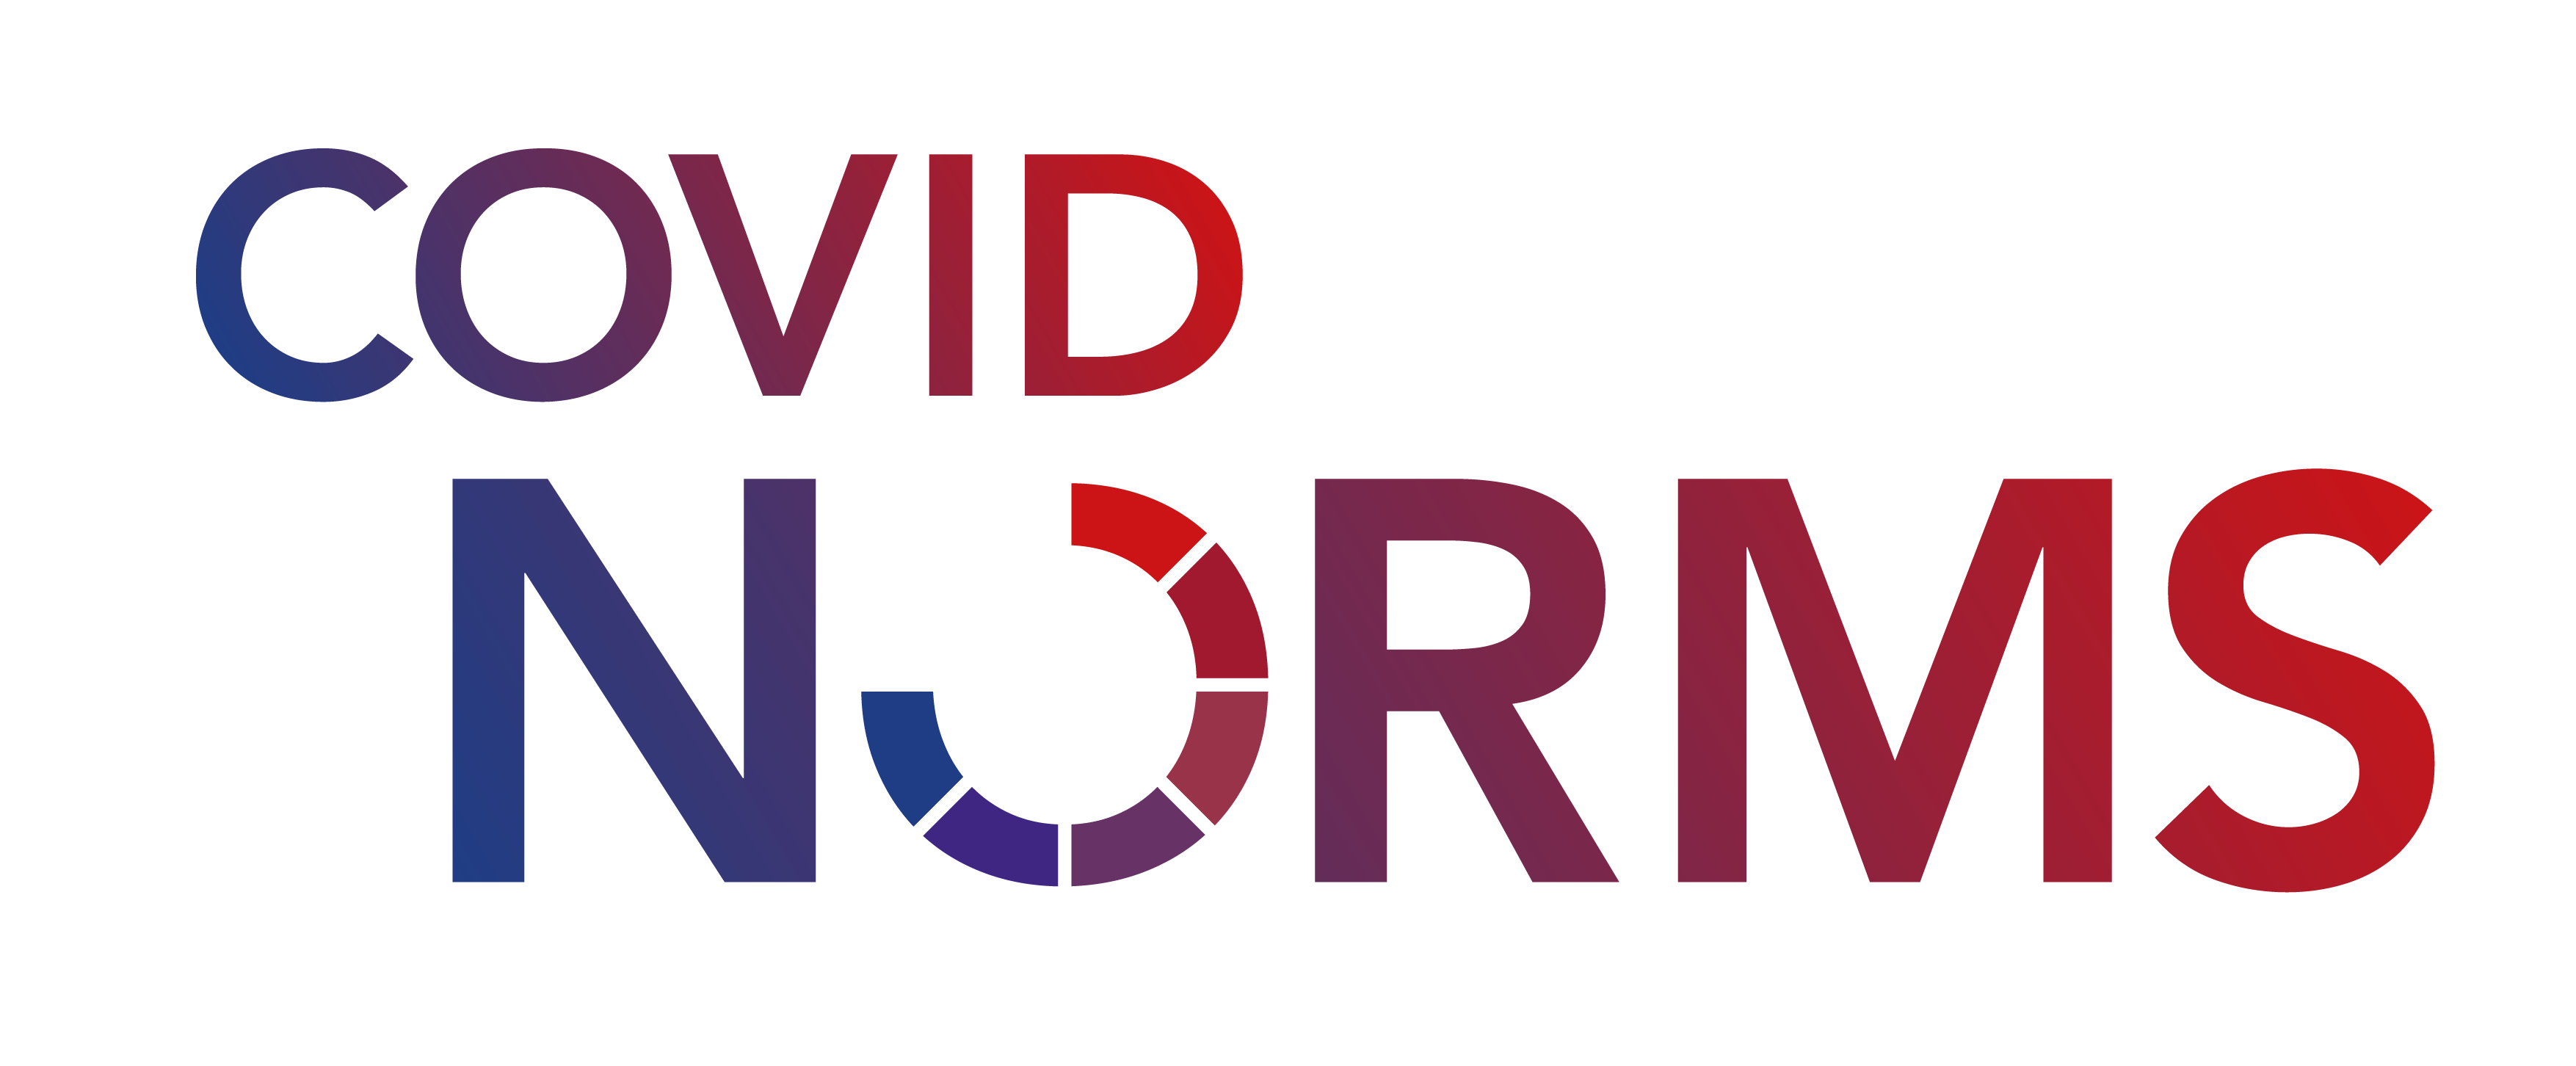 Covid Norms Logo